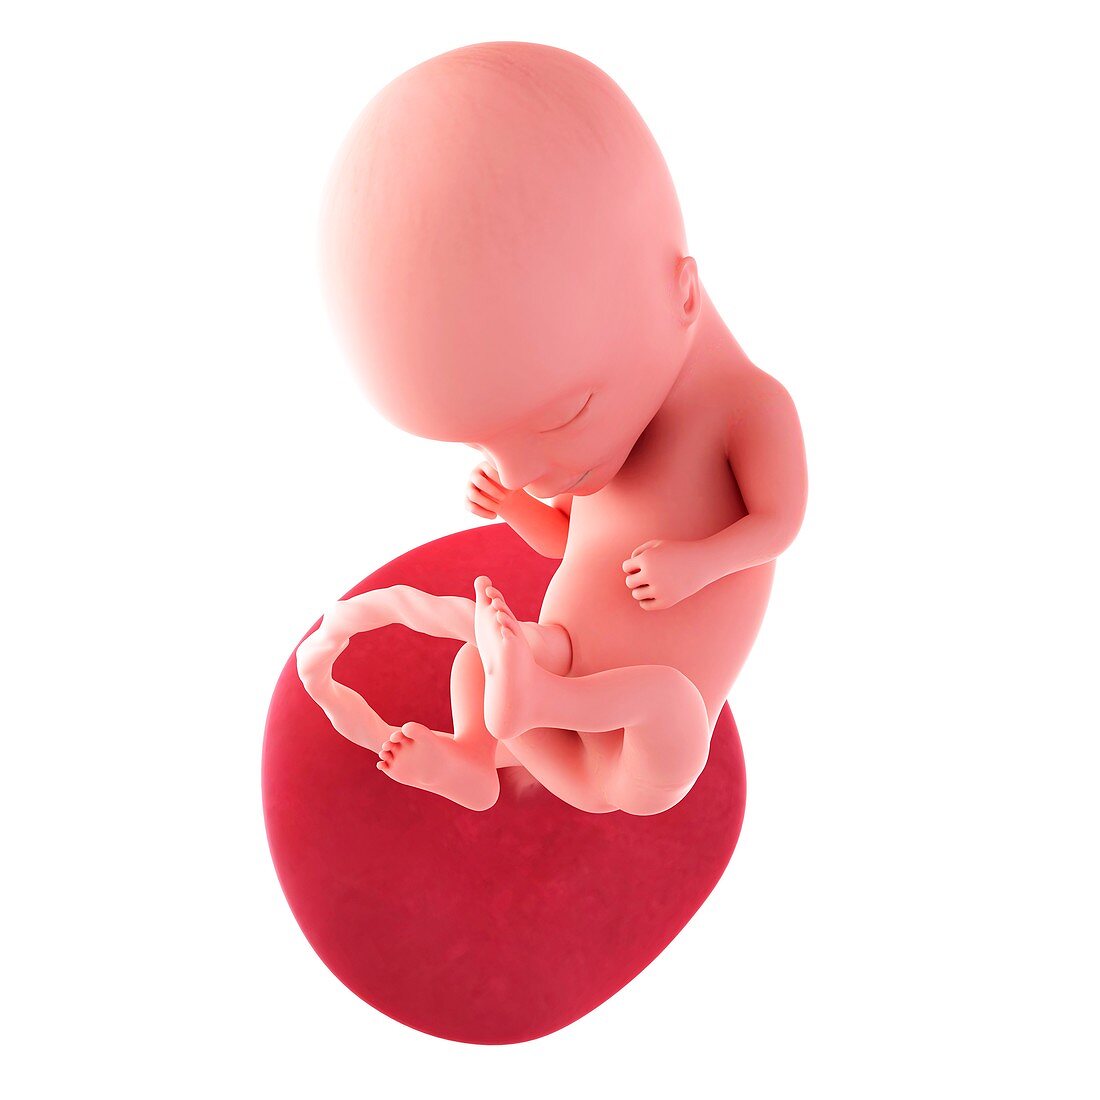 Human fetus age 14 weeks